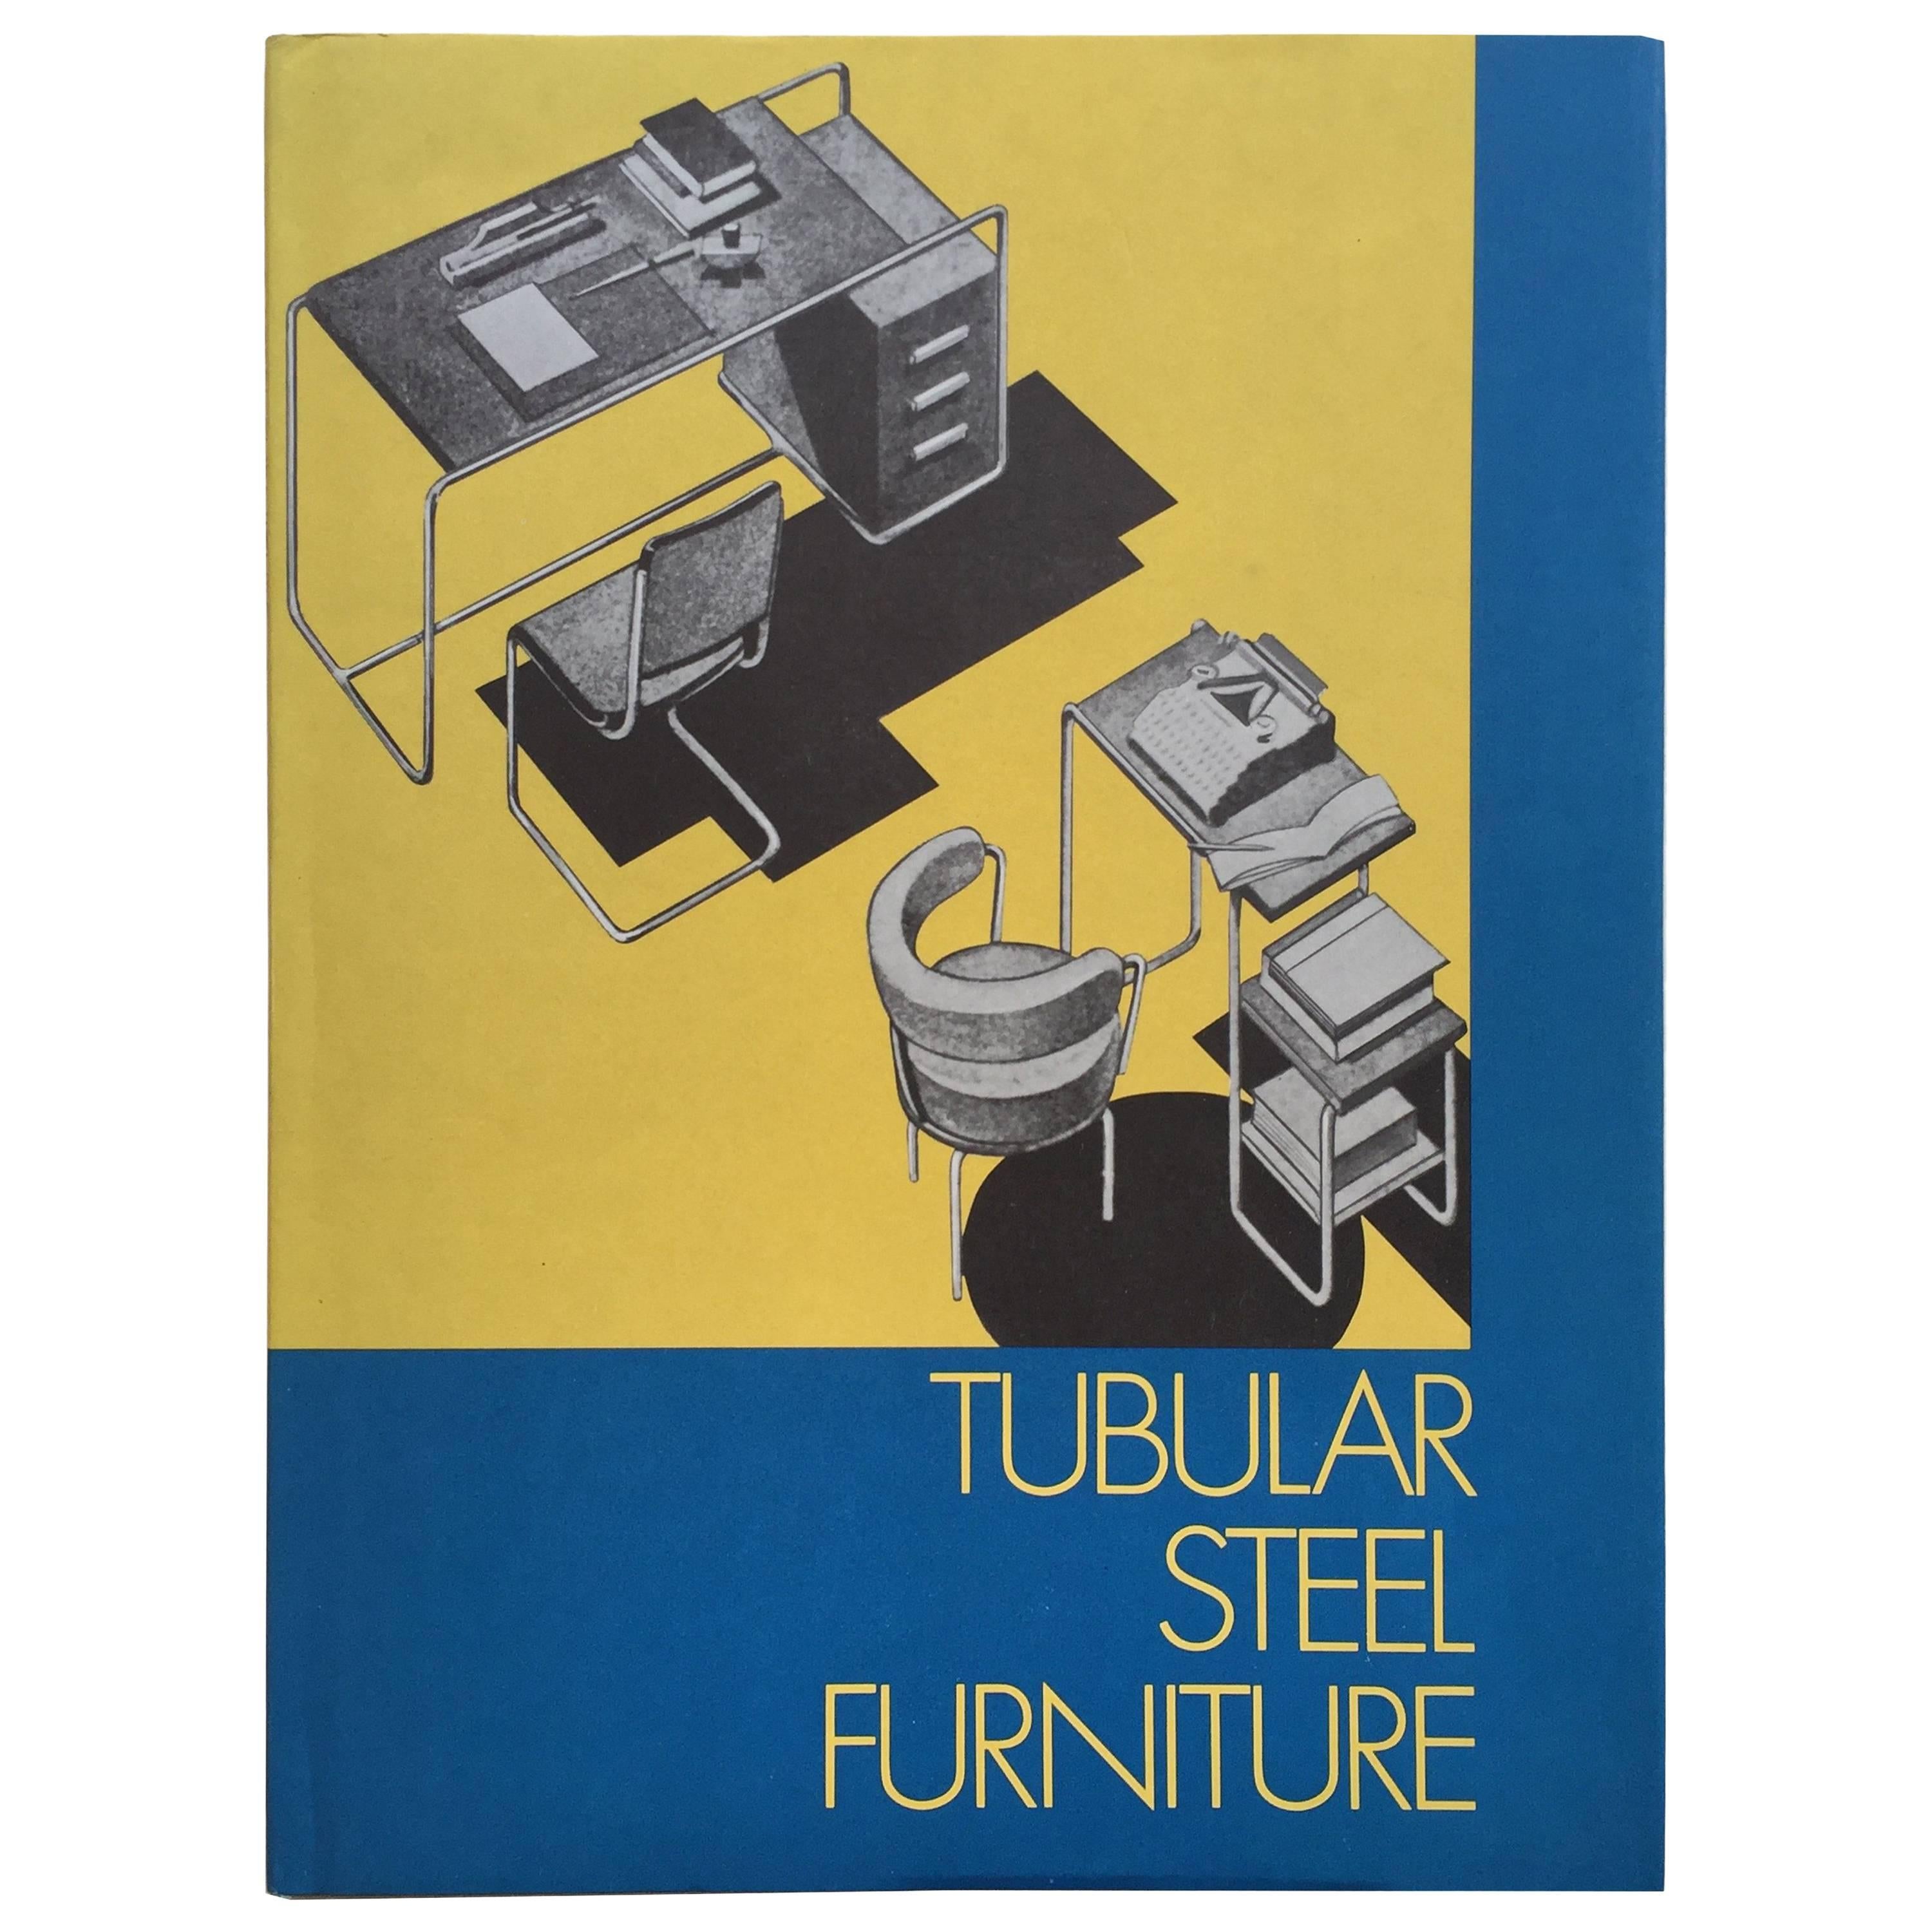 Stahlrohr-Möbel, Reyner Banham, 1979